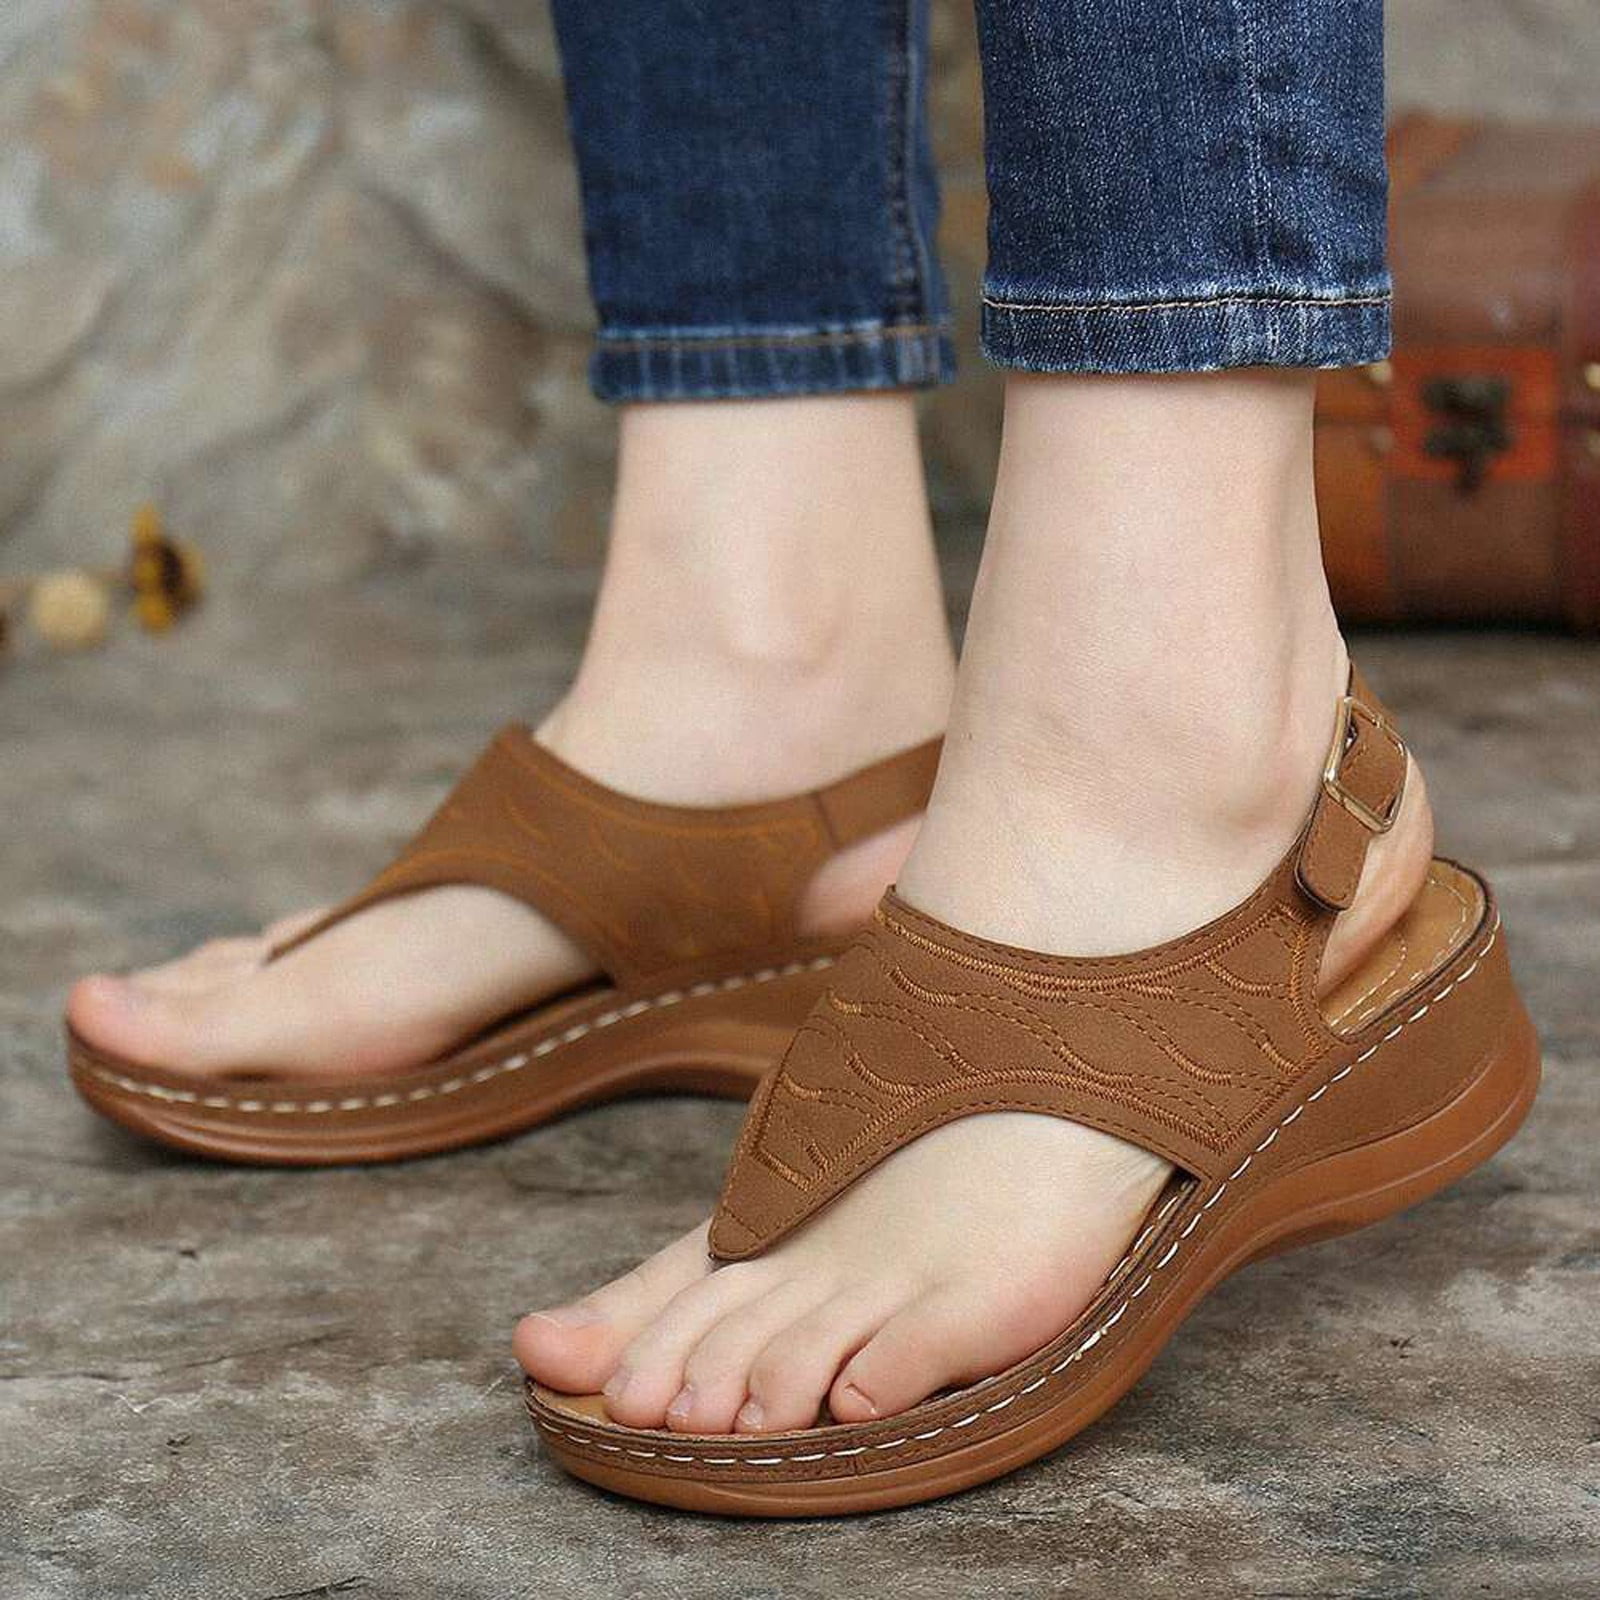 Colorblock Platform Sandals Summer Fashion Velcro Ankle Strap Outdoor Sandals Open Toe Blocks Wedges Casual Shoes for Women 